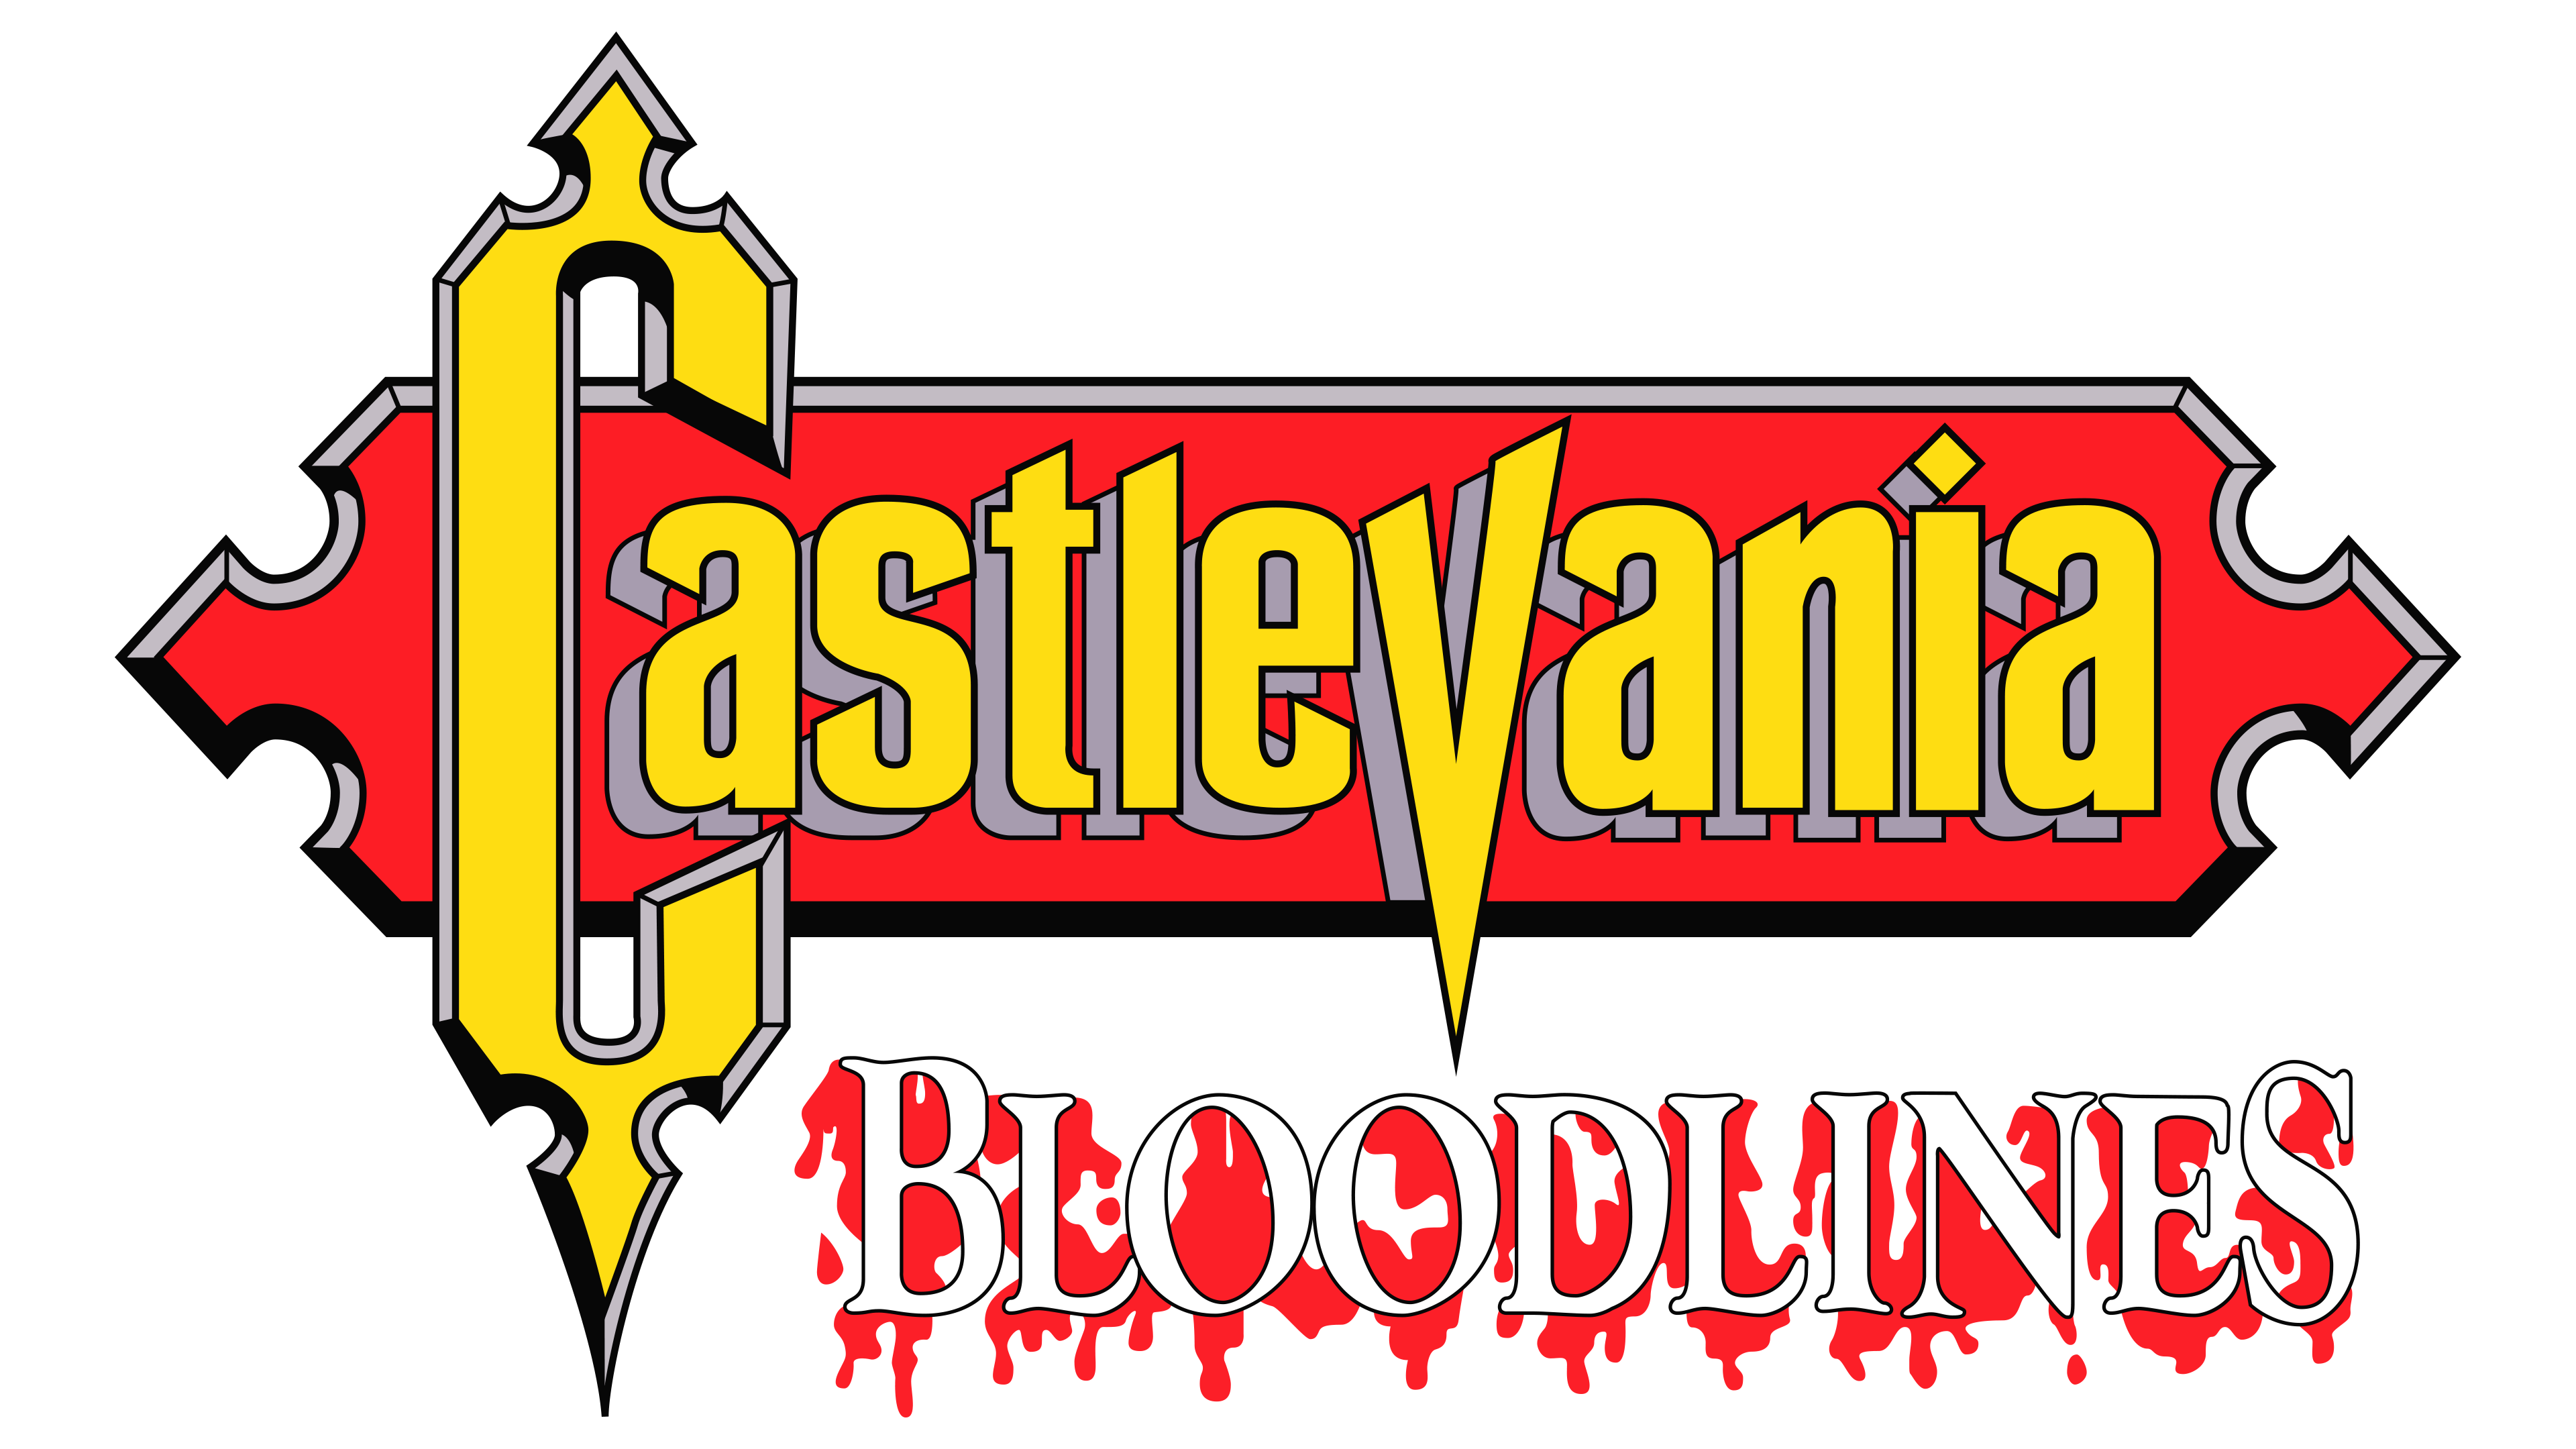 download castlevania bloodlines snes